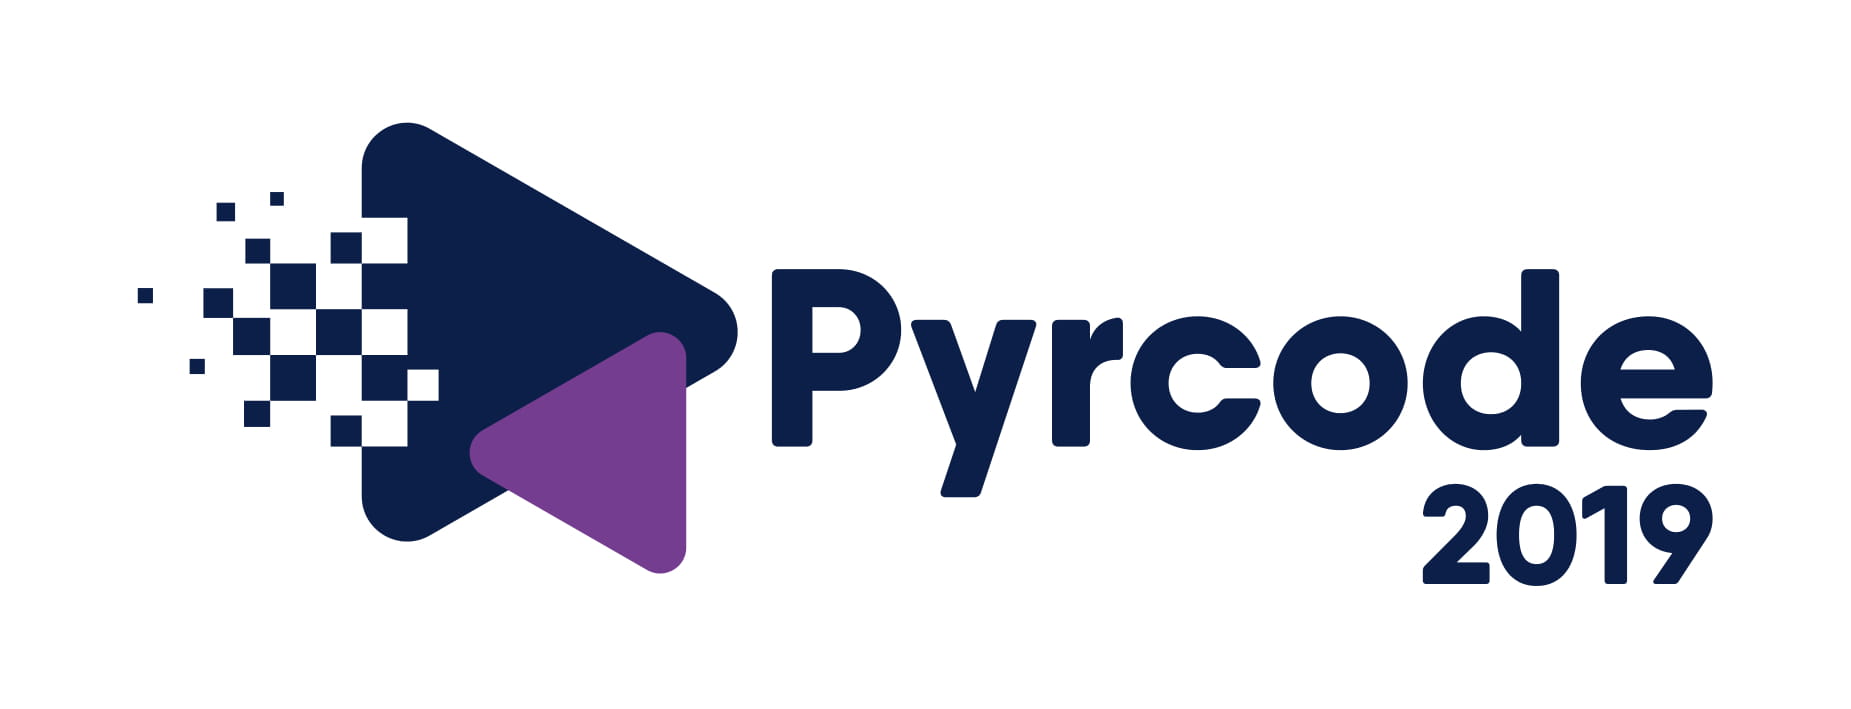 pyrcode_logo-1.jpg